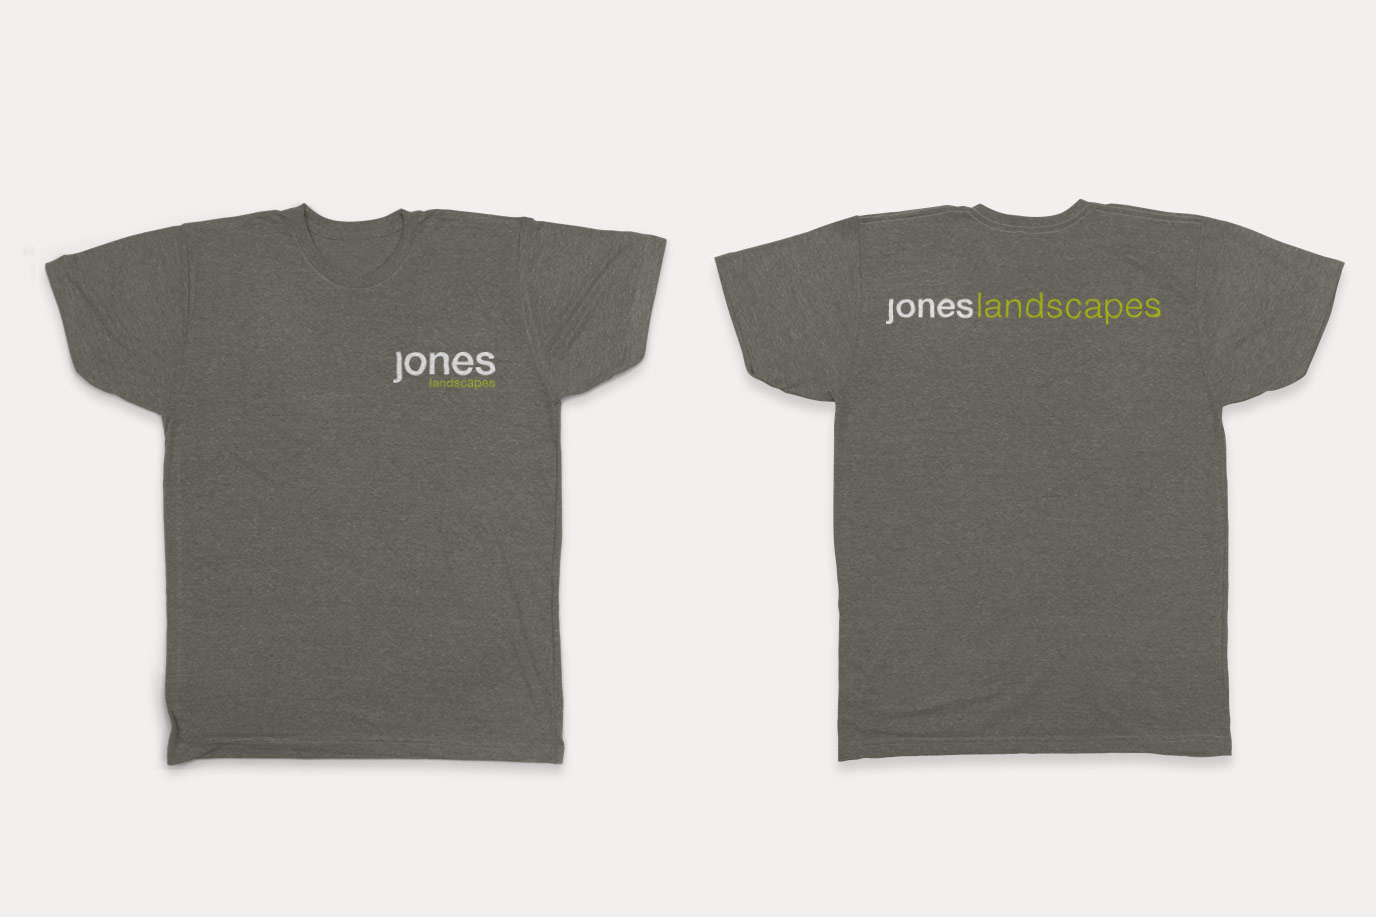 Jones Landscapes T-shirt